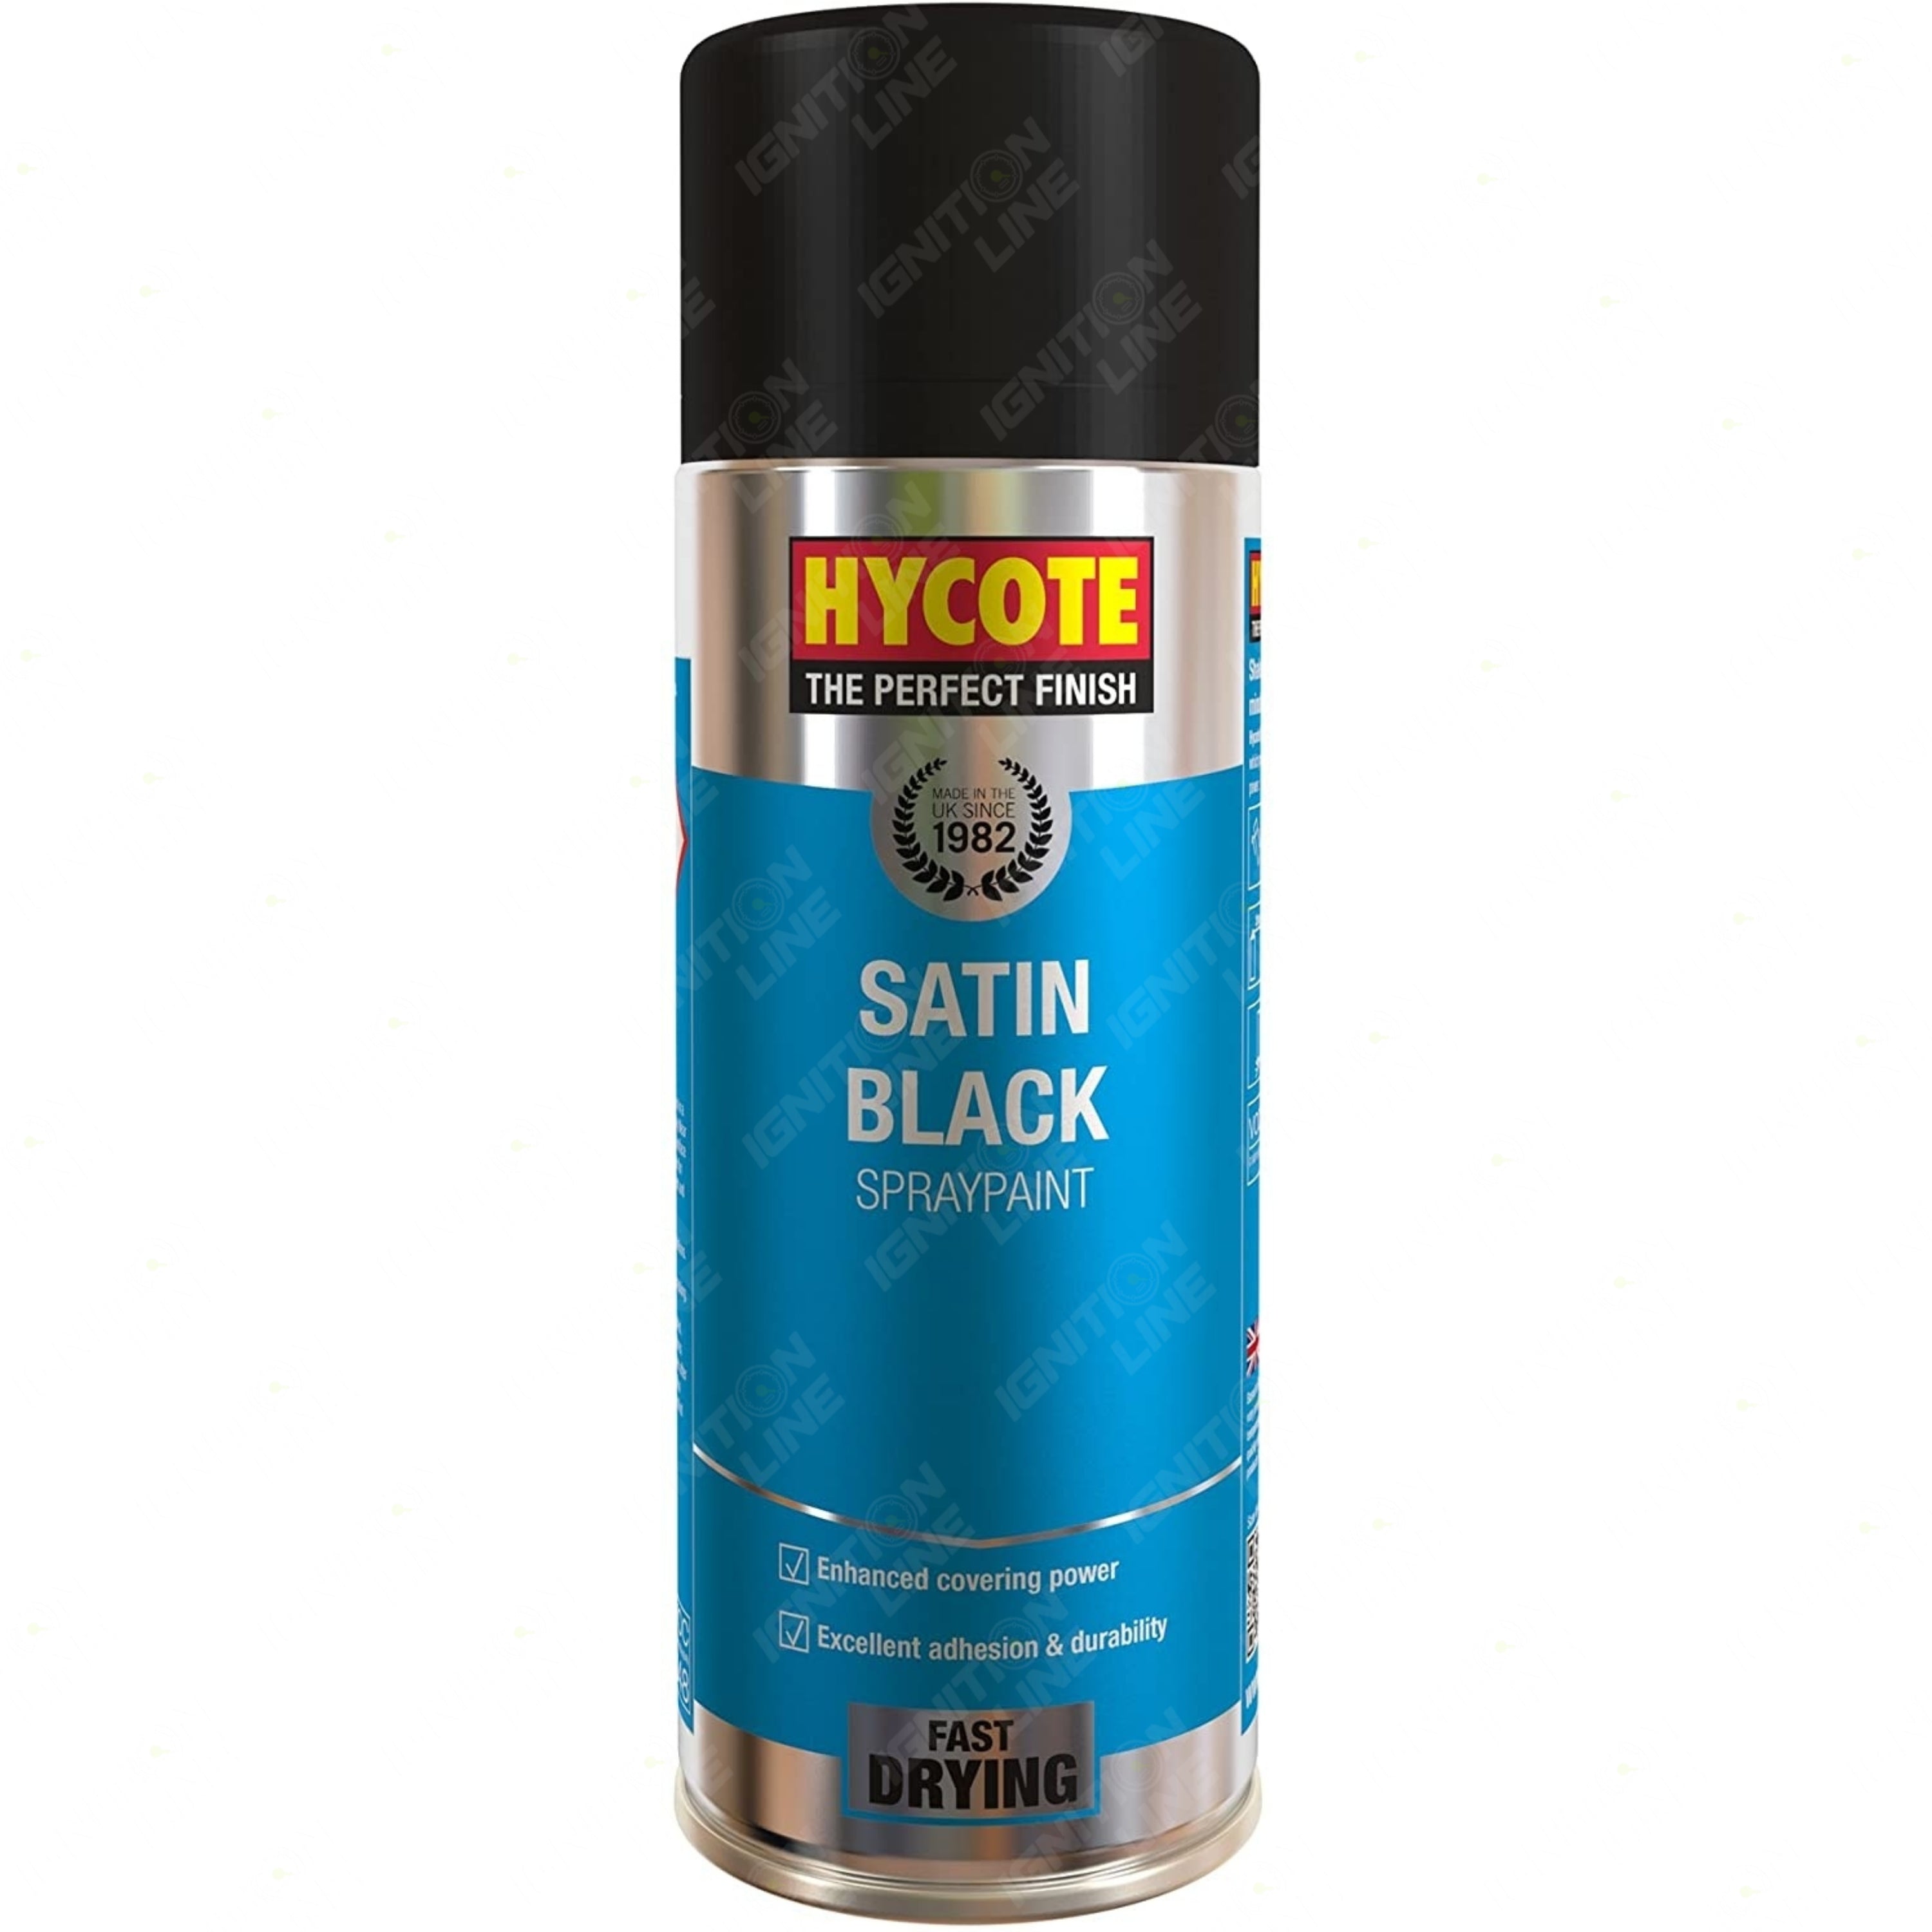 Hycote Satin Black Spraypaint 400ml